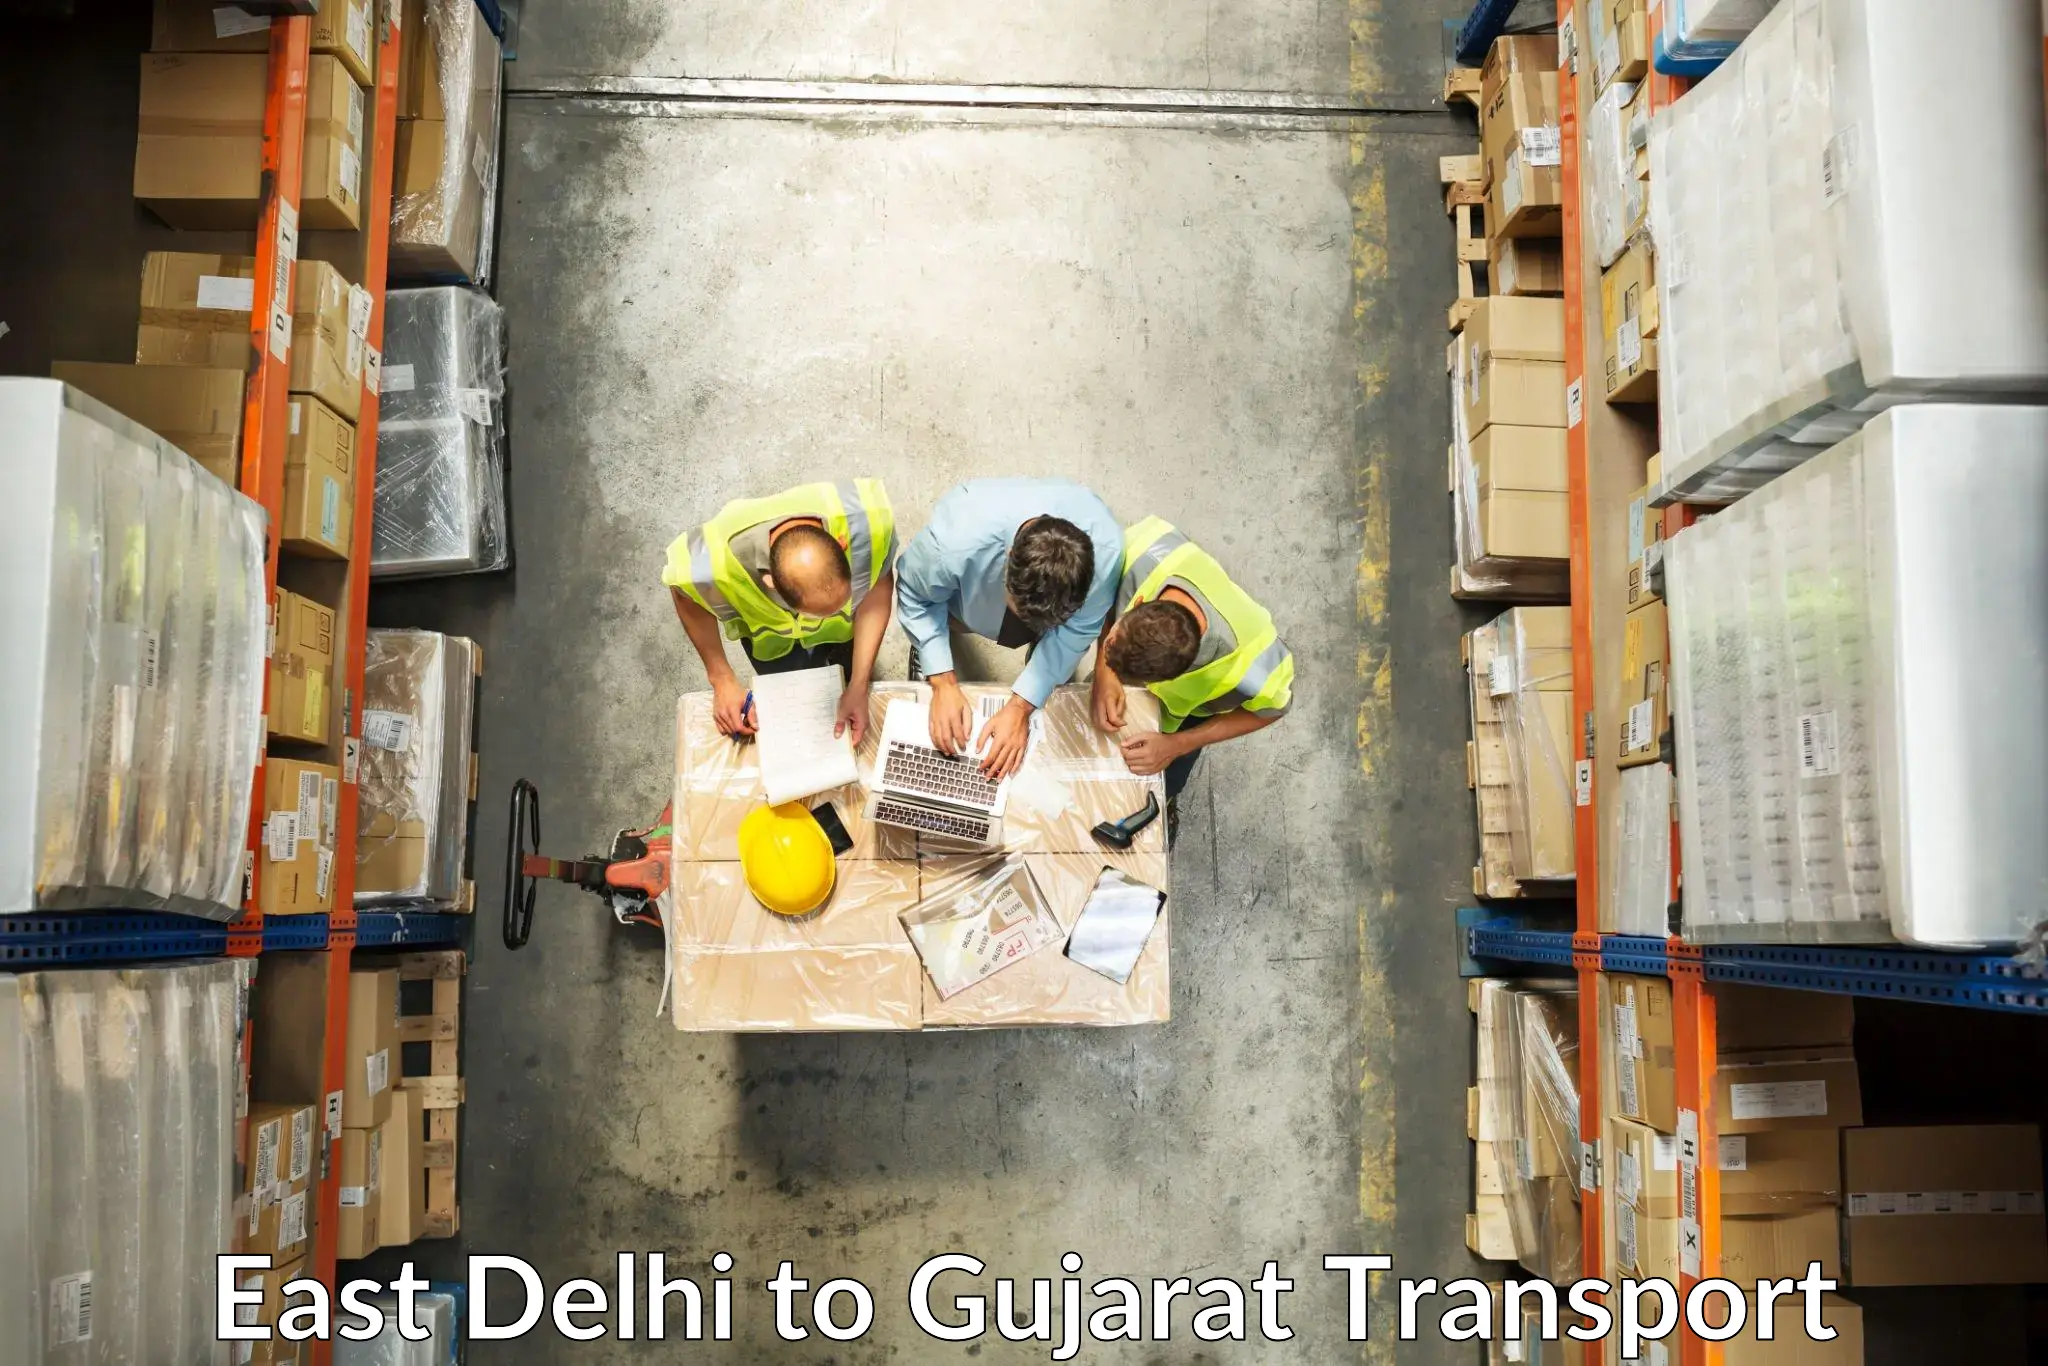 Bike shipping service East Delhi to Gujarat